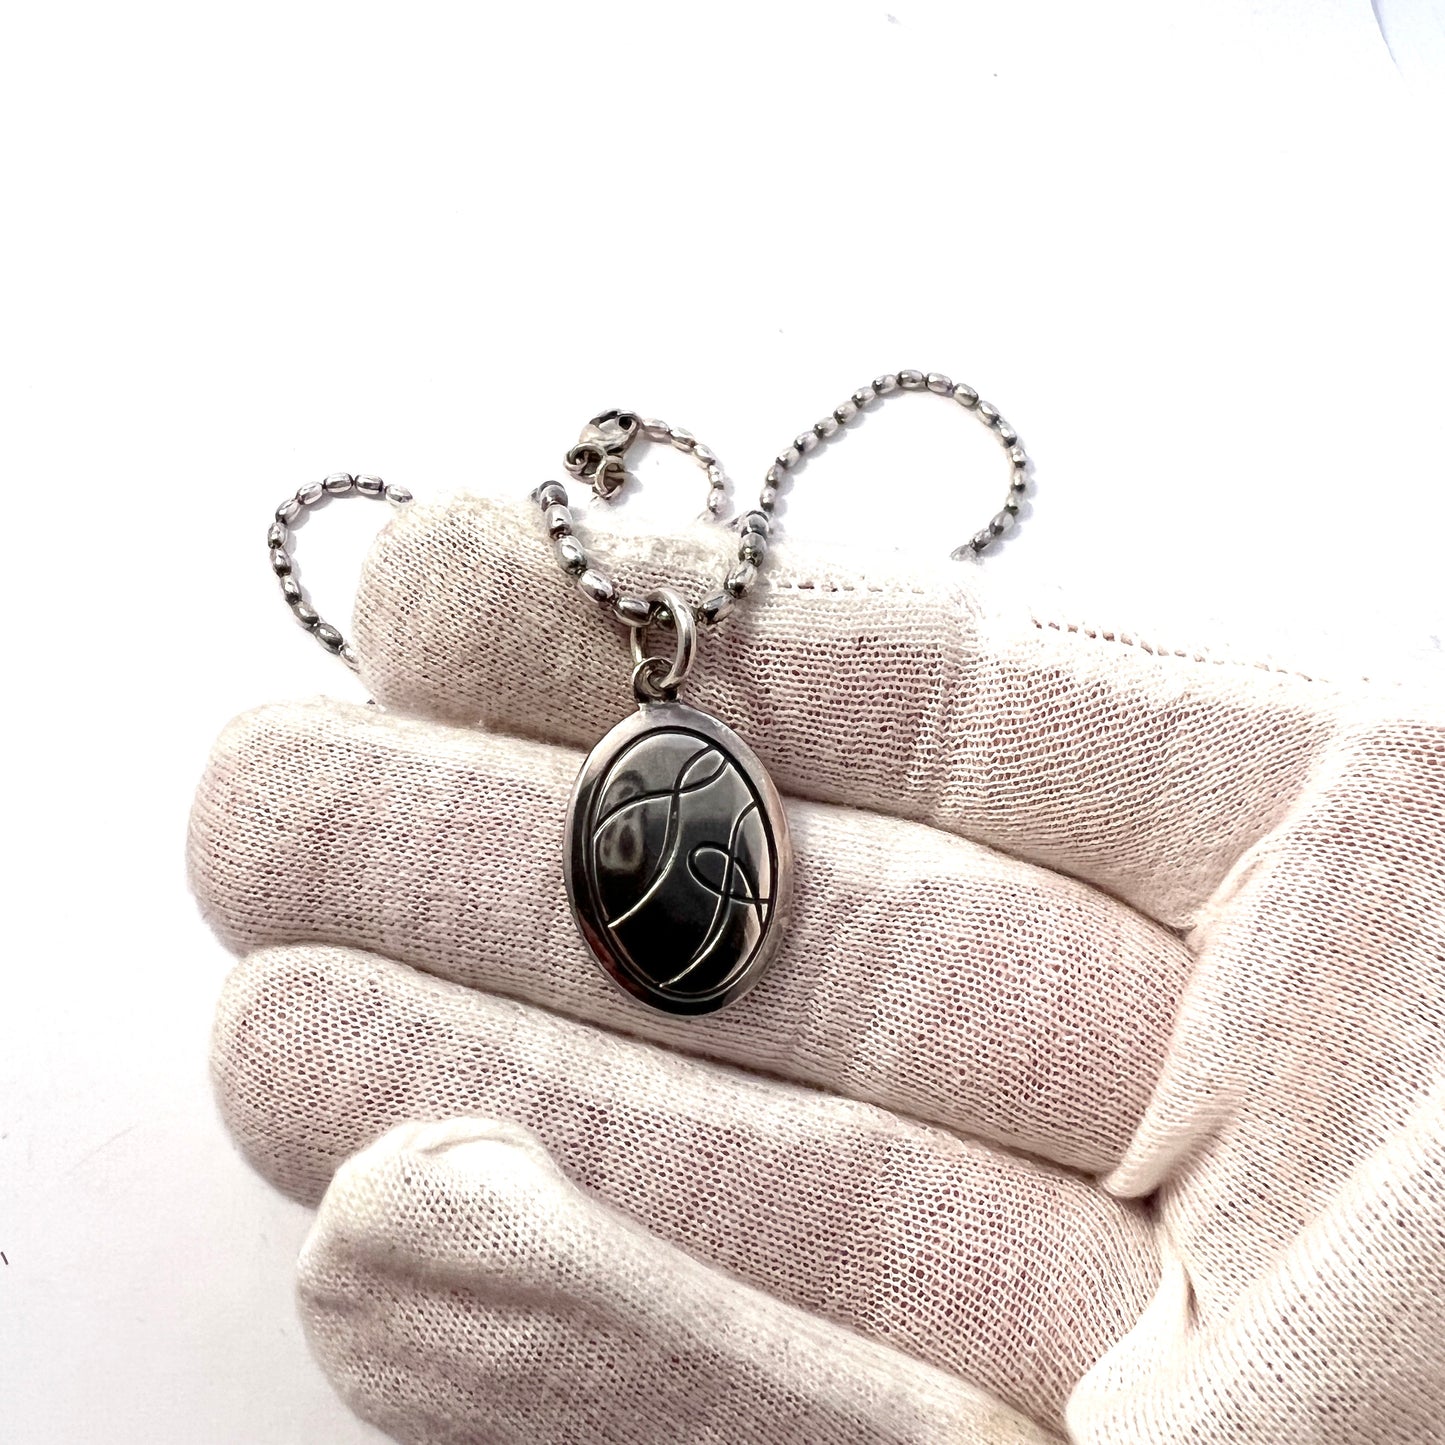 Kalevala Koru, Finland . Vintage Sterling Silver Pendant Necklace.